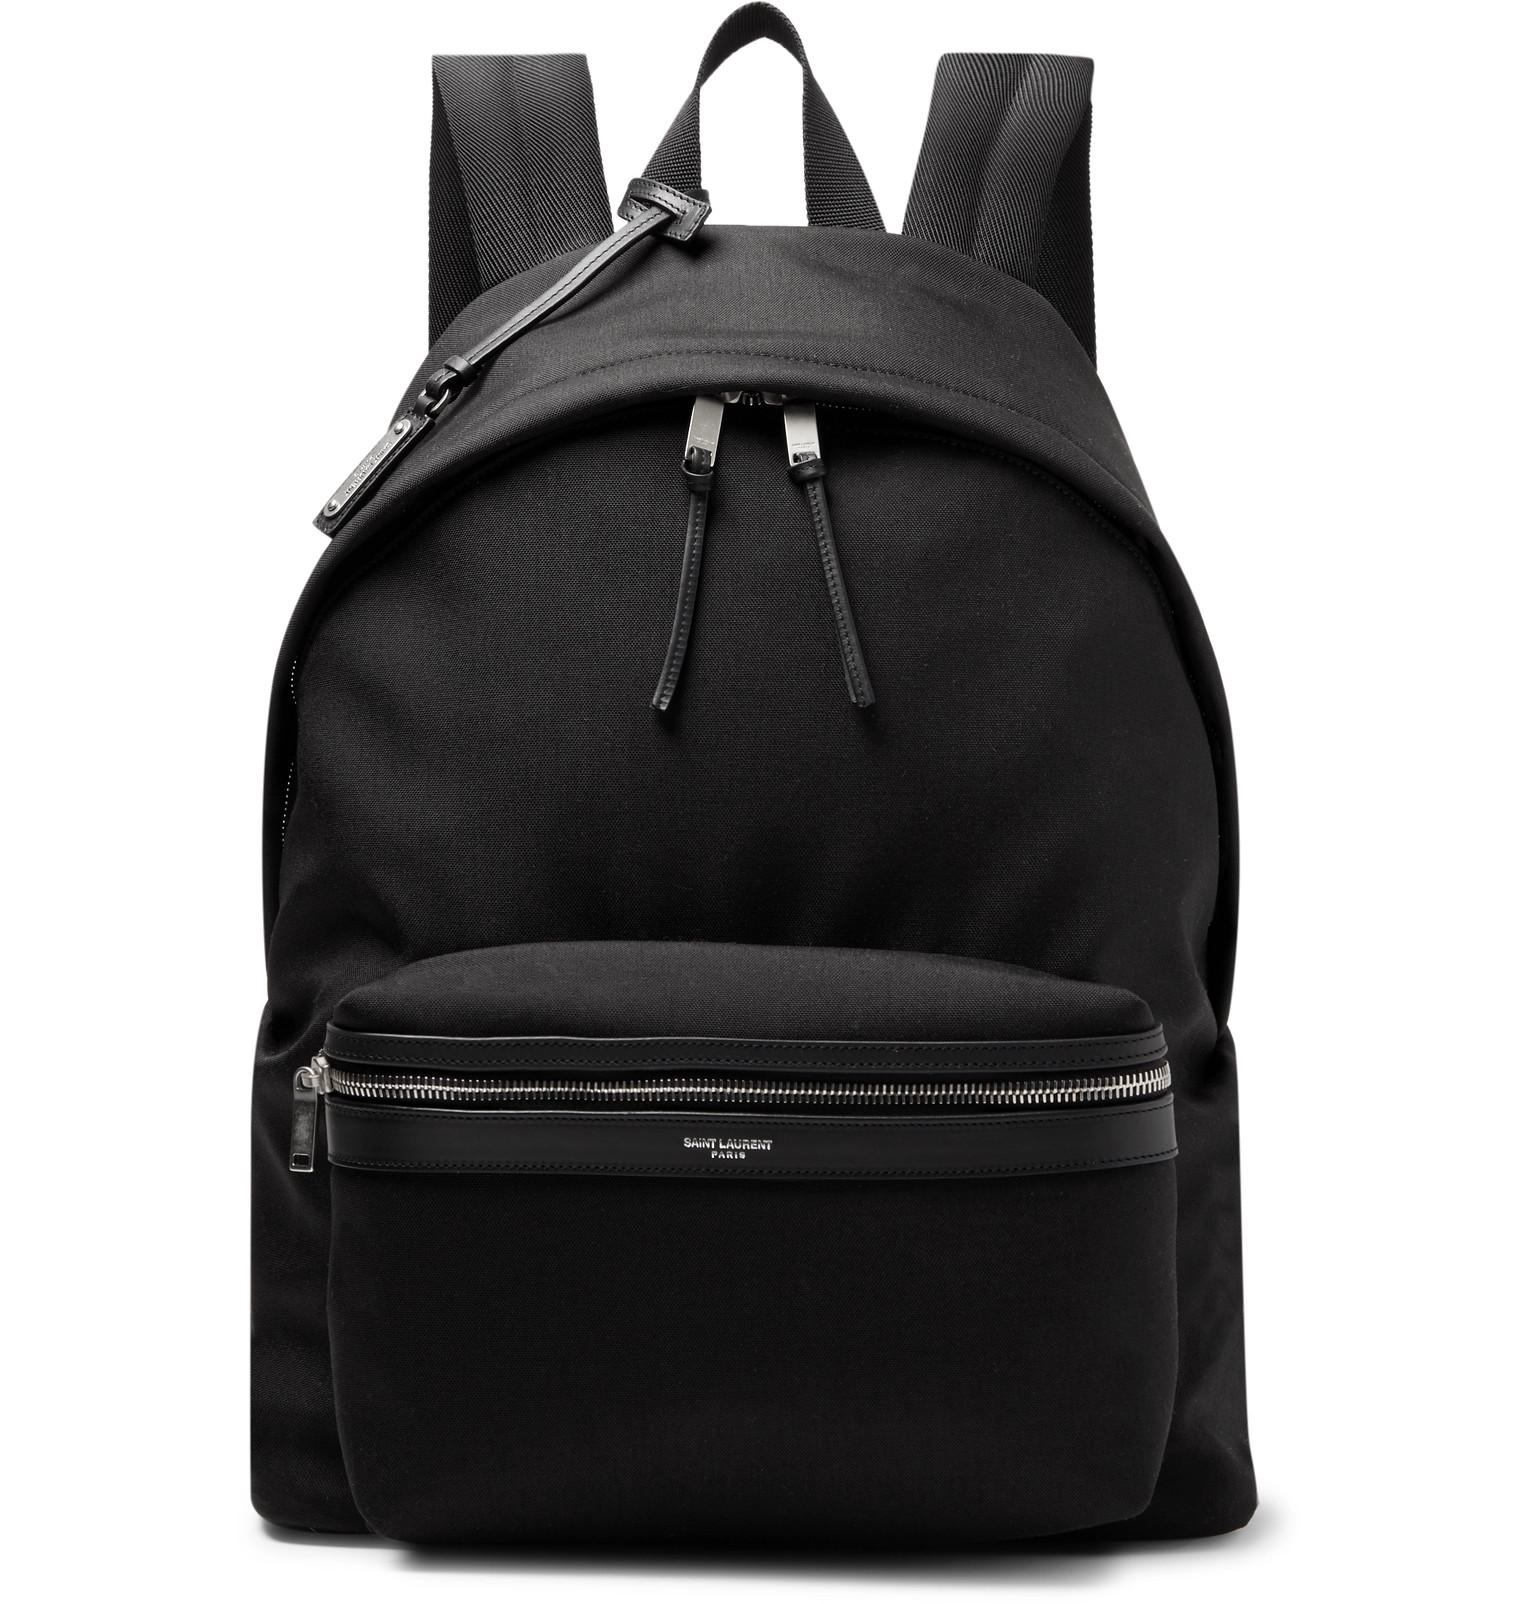 Lyst - Saint Laurent City Leather-trimmed Canvas Backpack in Black for Men